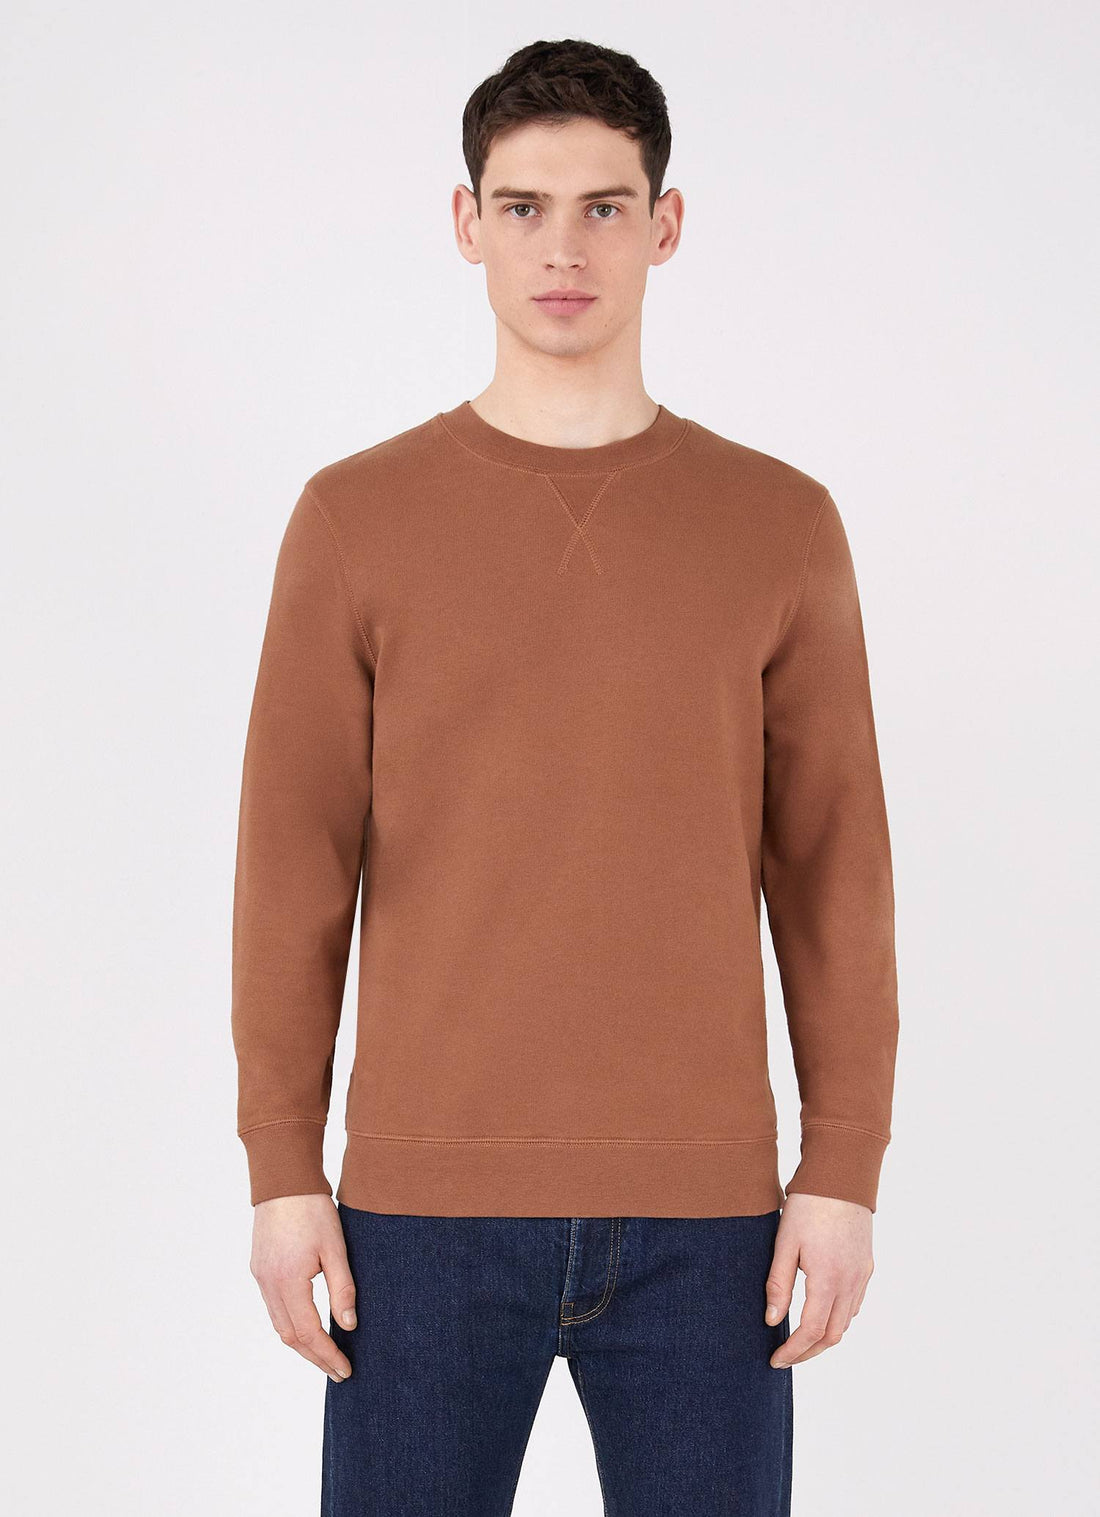 Men's Loopback Sweatshirt in Gingerbread